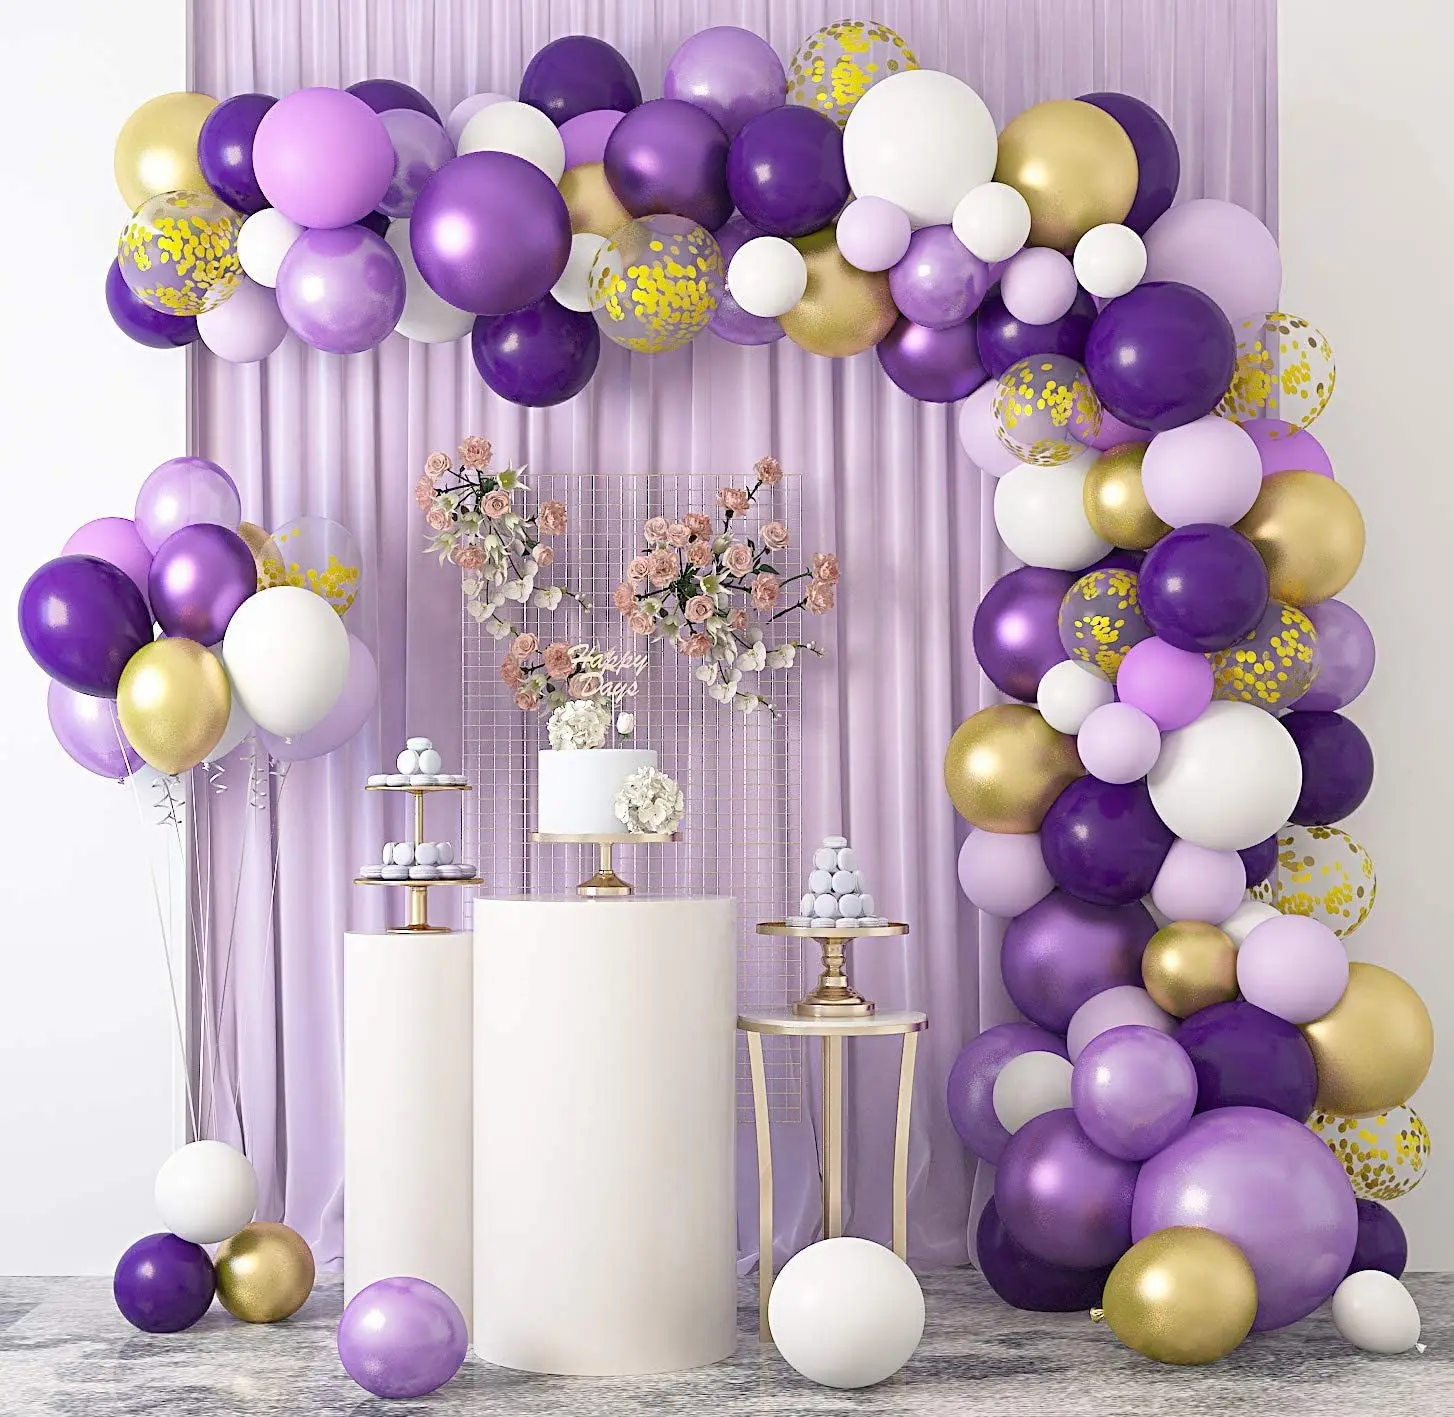 Macaron Balloon Arch Kit Set Birthday Party Decor Kids Ballon Arch Purple Balloons Garland Baby Shower Party Backdrop Decor